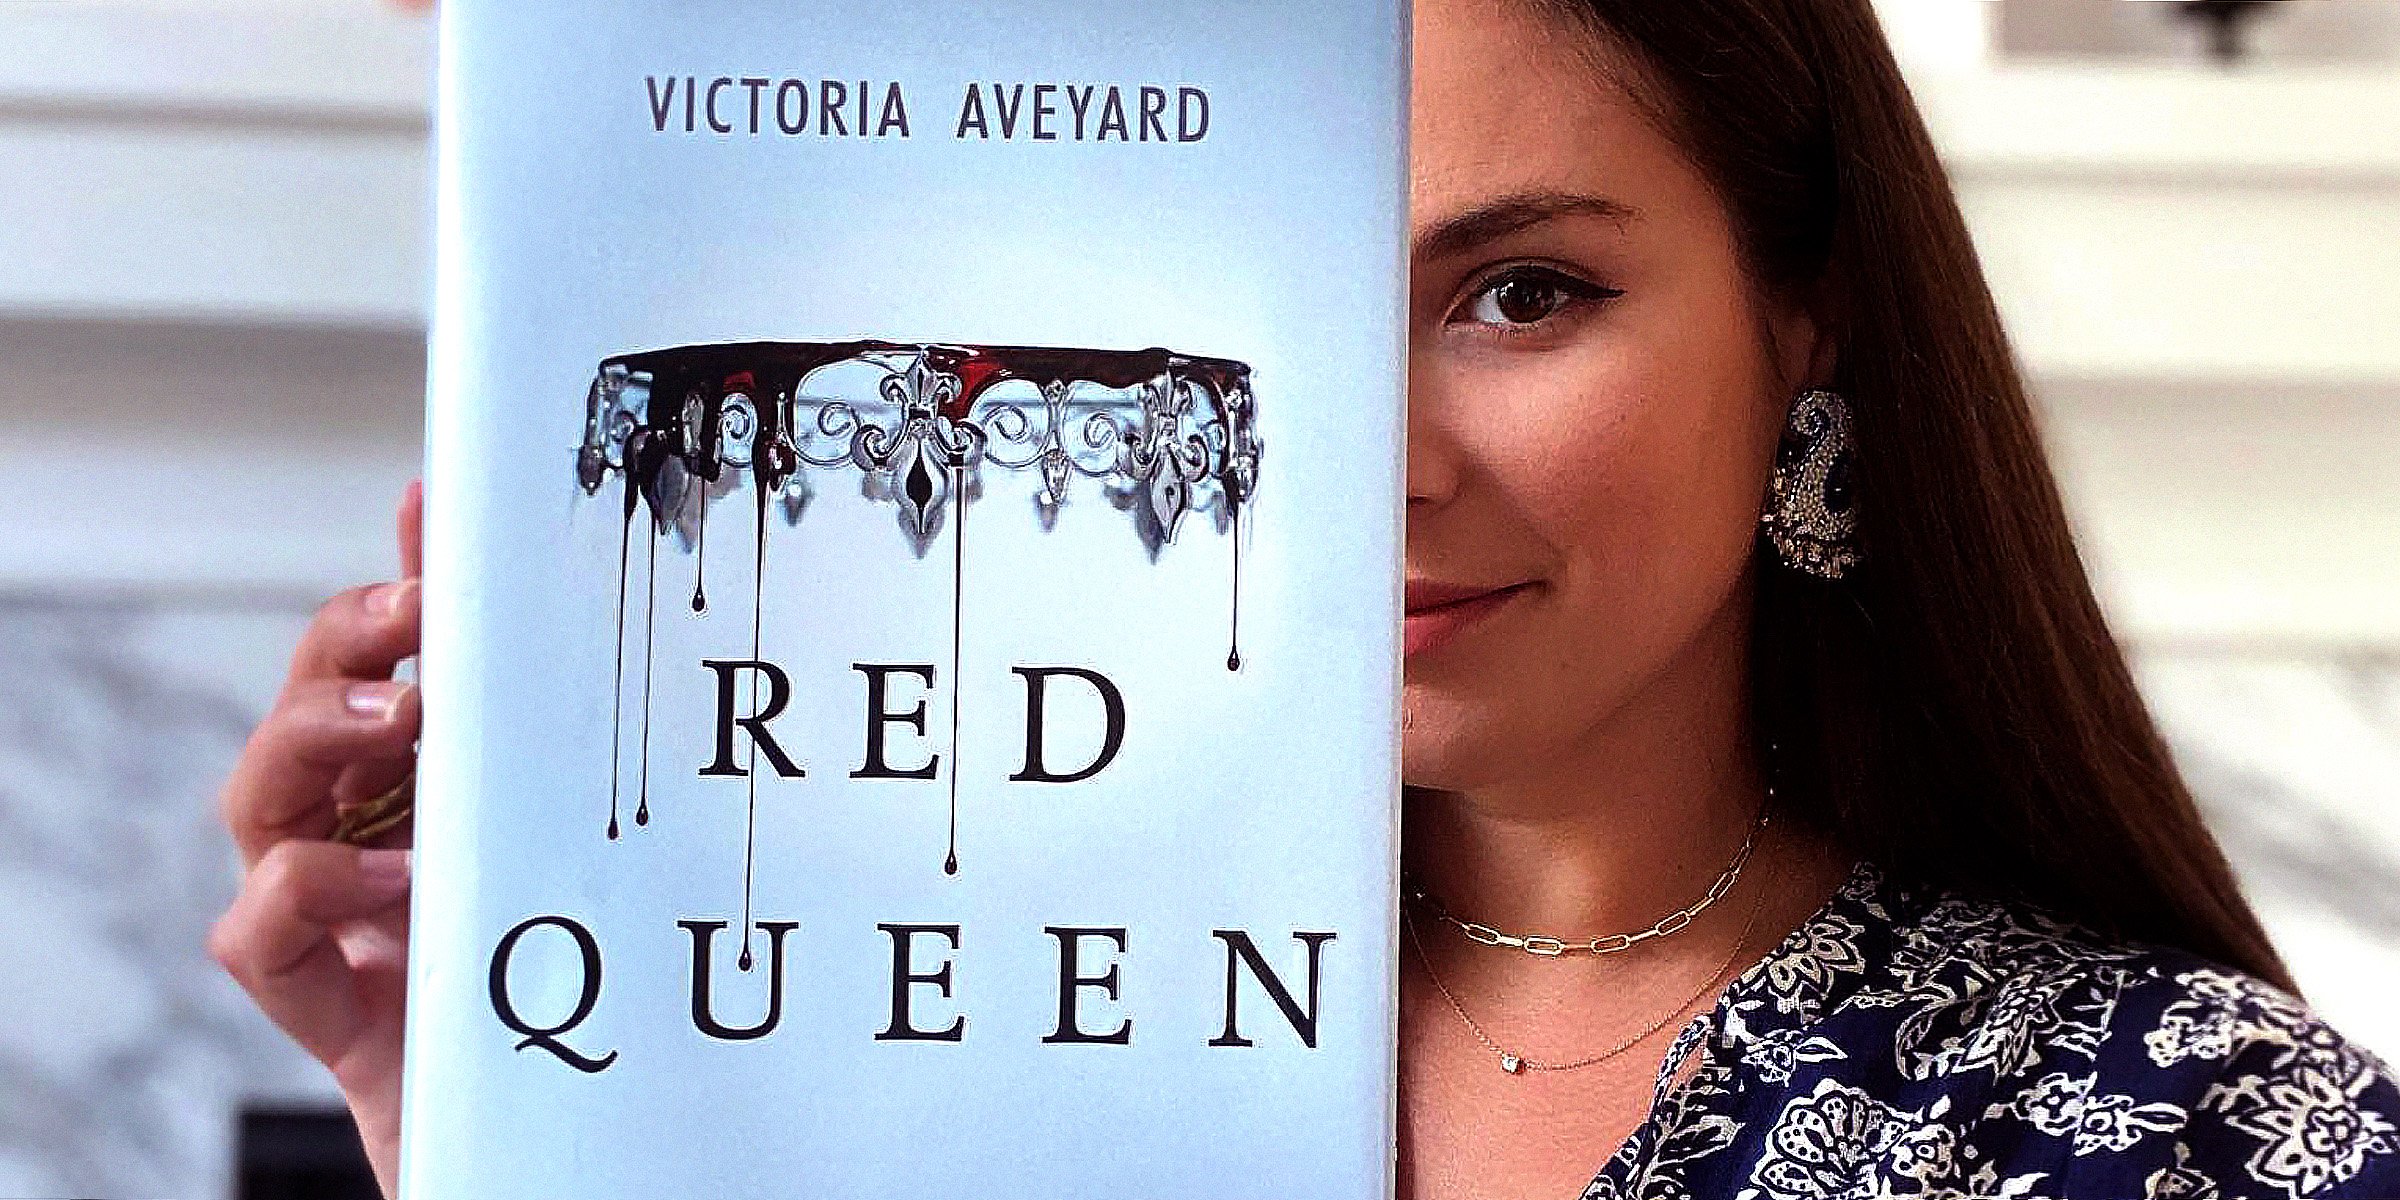 Victoria Aveyard holding her novel, "Red Queen"  | Source: facebook.com/victoriaaveyard